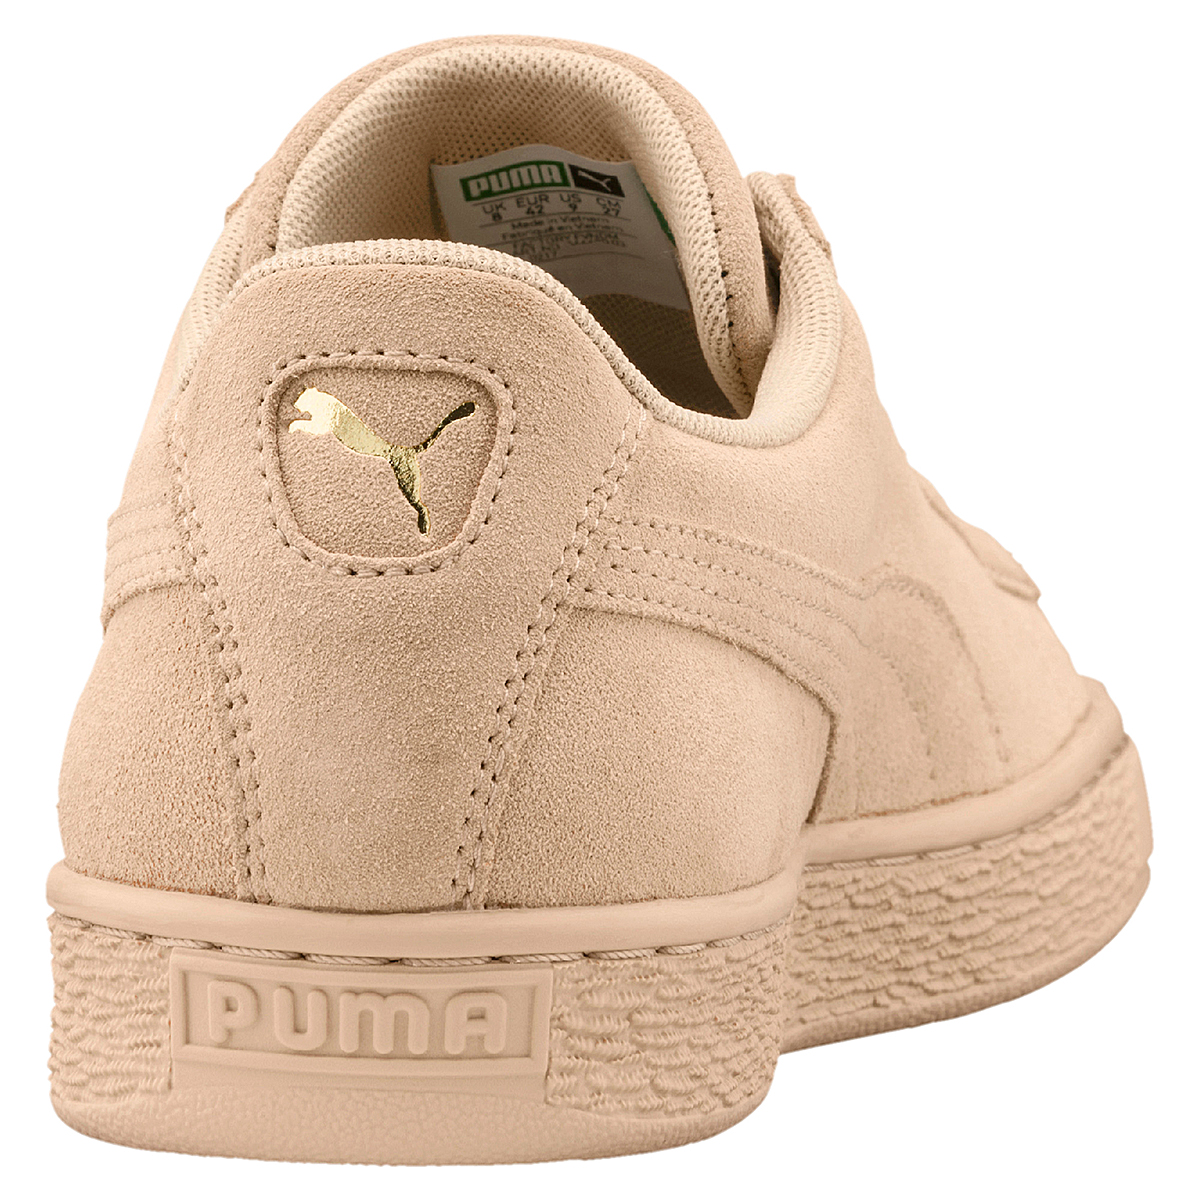 Puma Suede Classic Tonal Unisex Sneaker Low-Top 366490 03